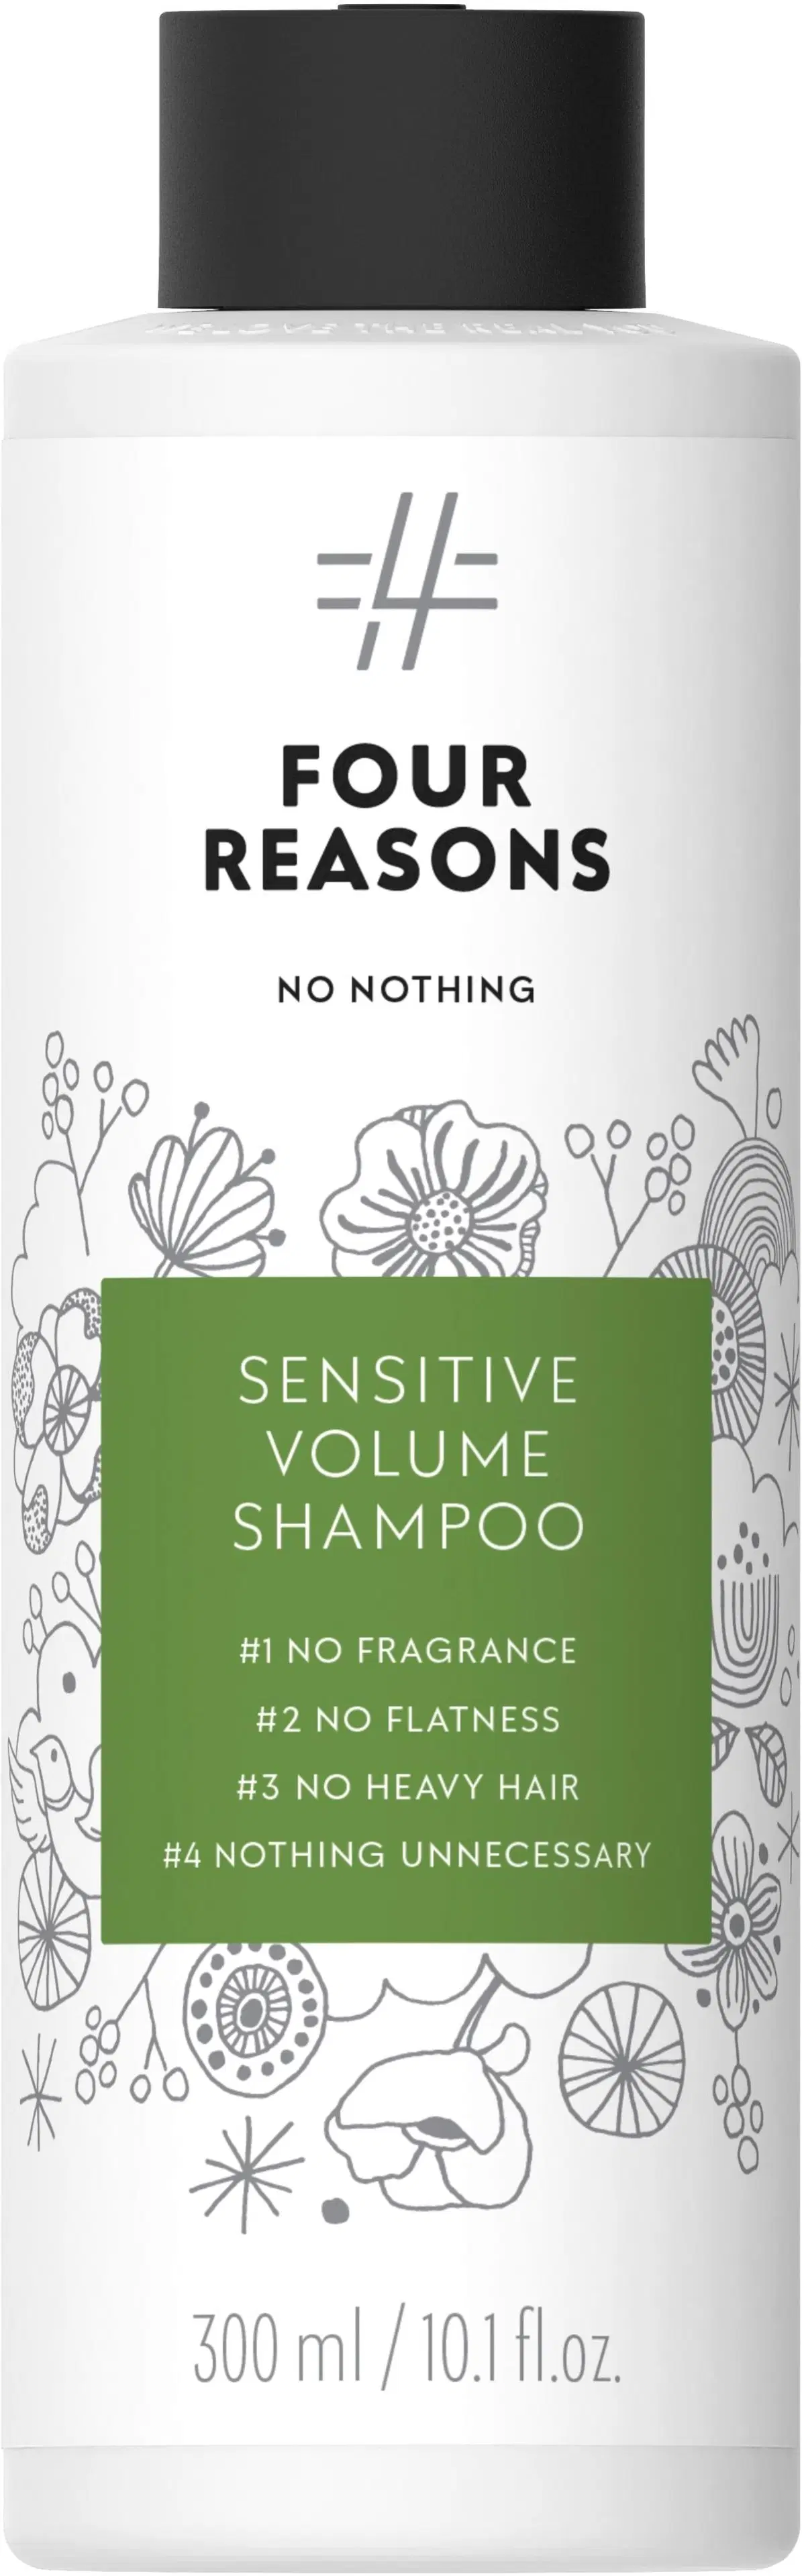 Four Reasons No nothing Sensitive Volume Shampoo 300 ml